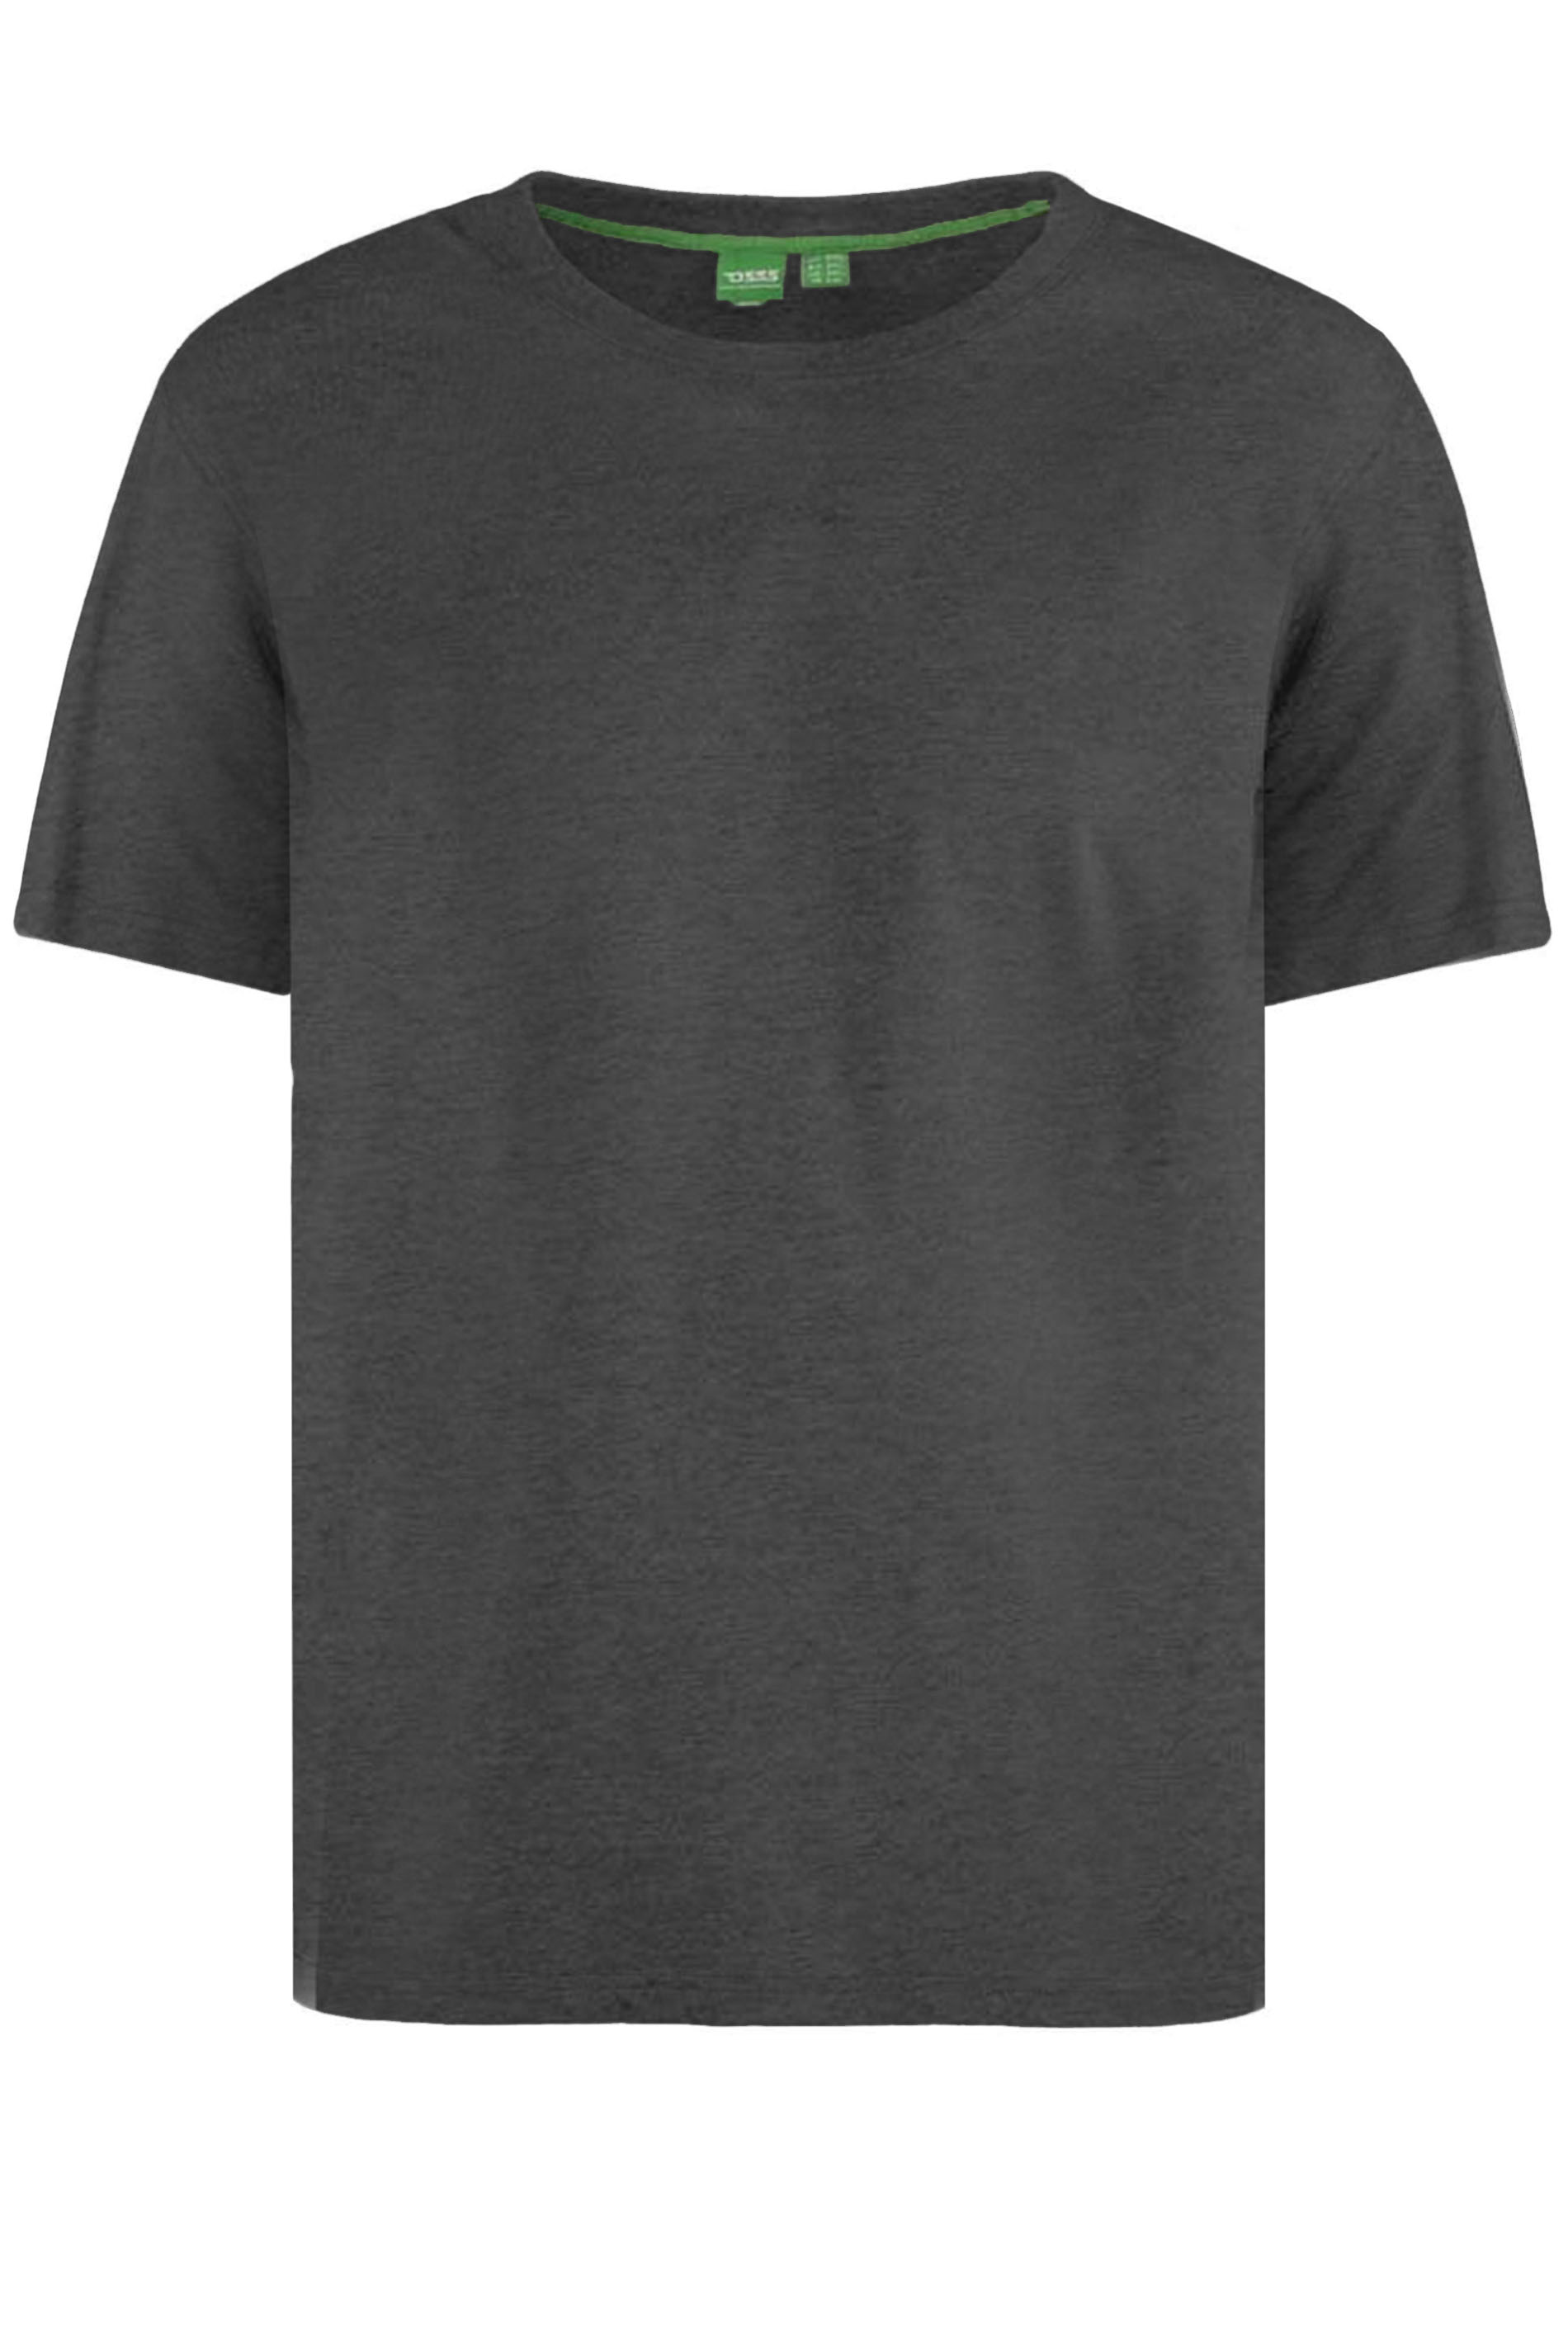 D555 Charcoal Grey Duke Basic T-Shirt | BadRhino 2